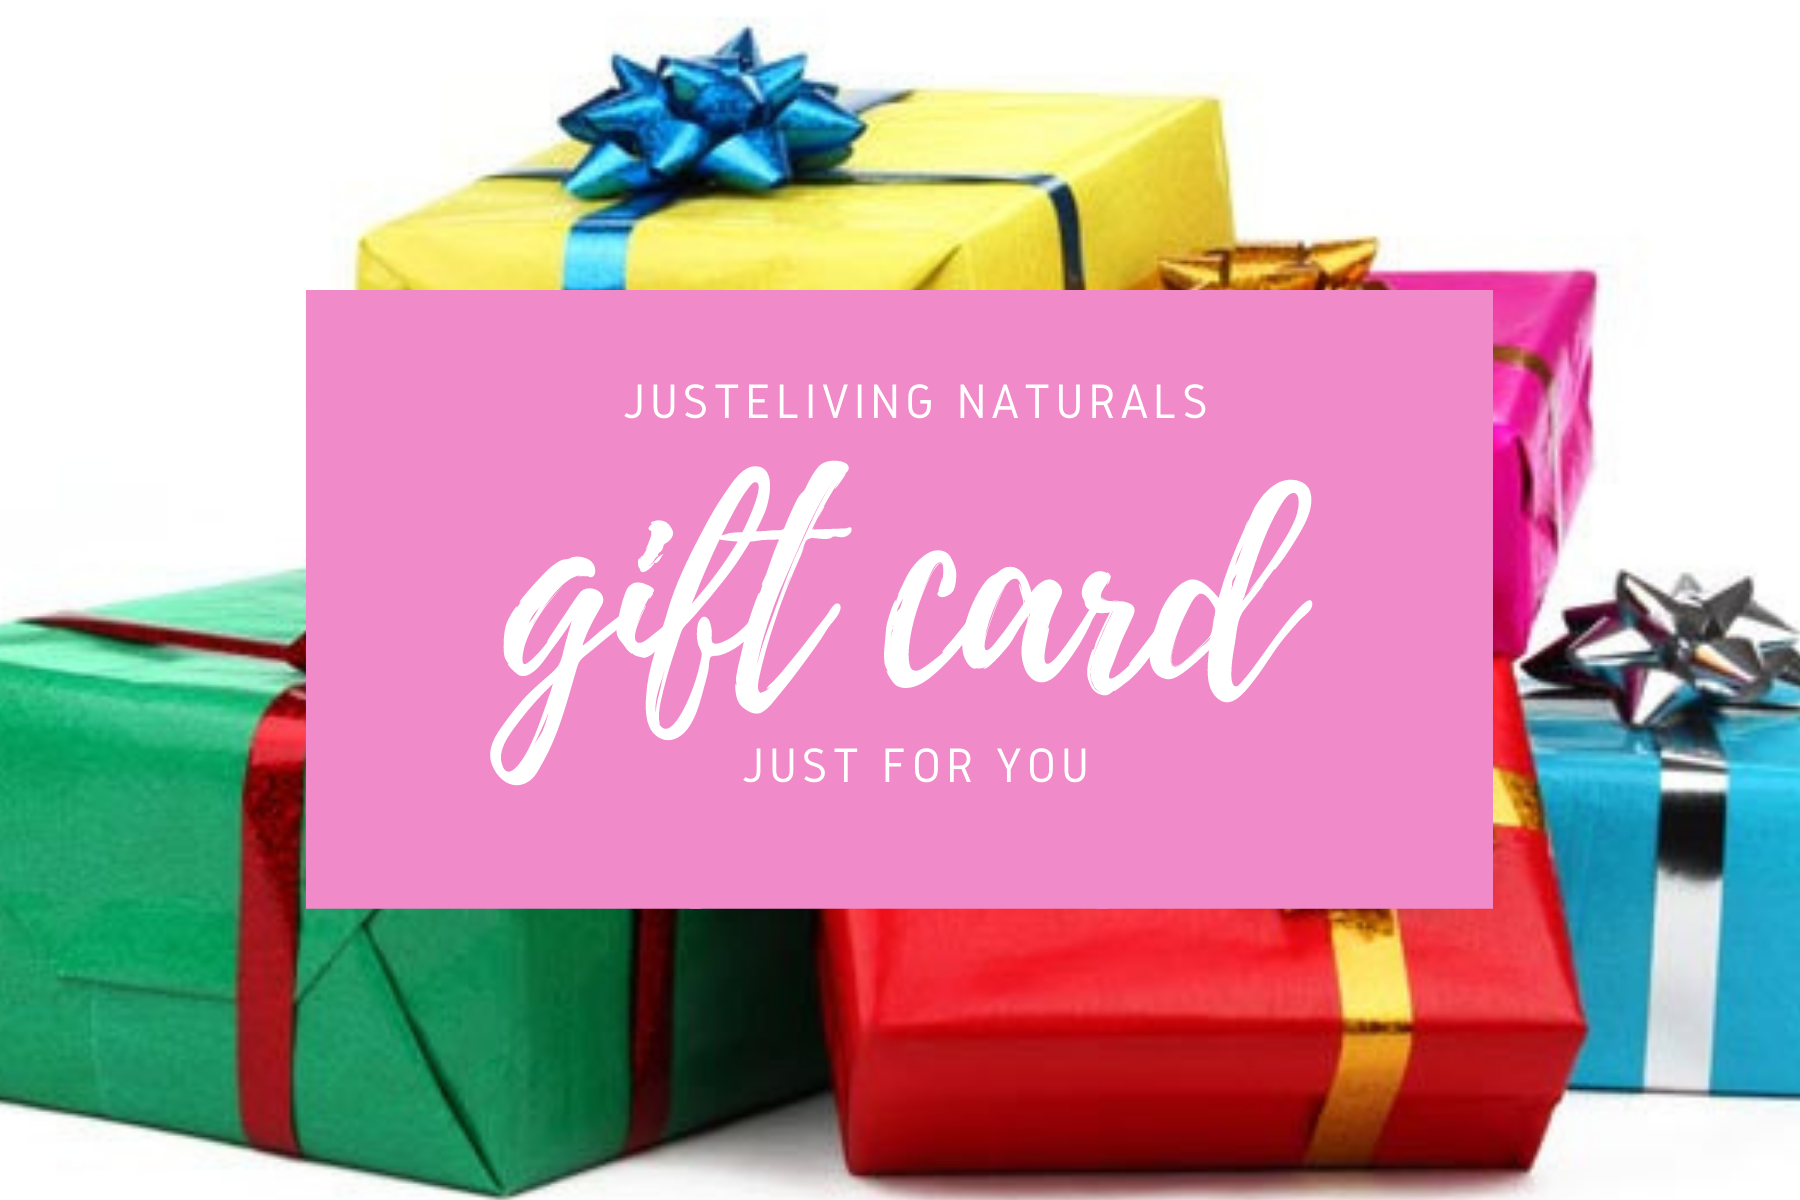 JLN Gift Cards